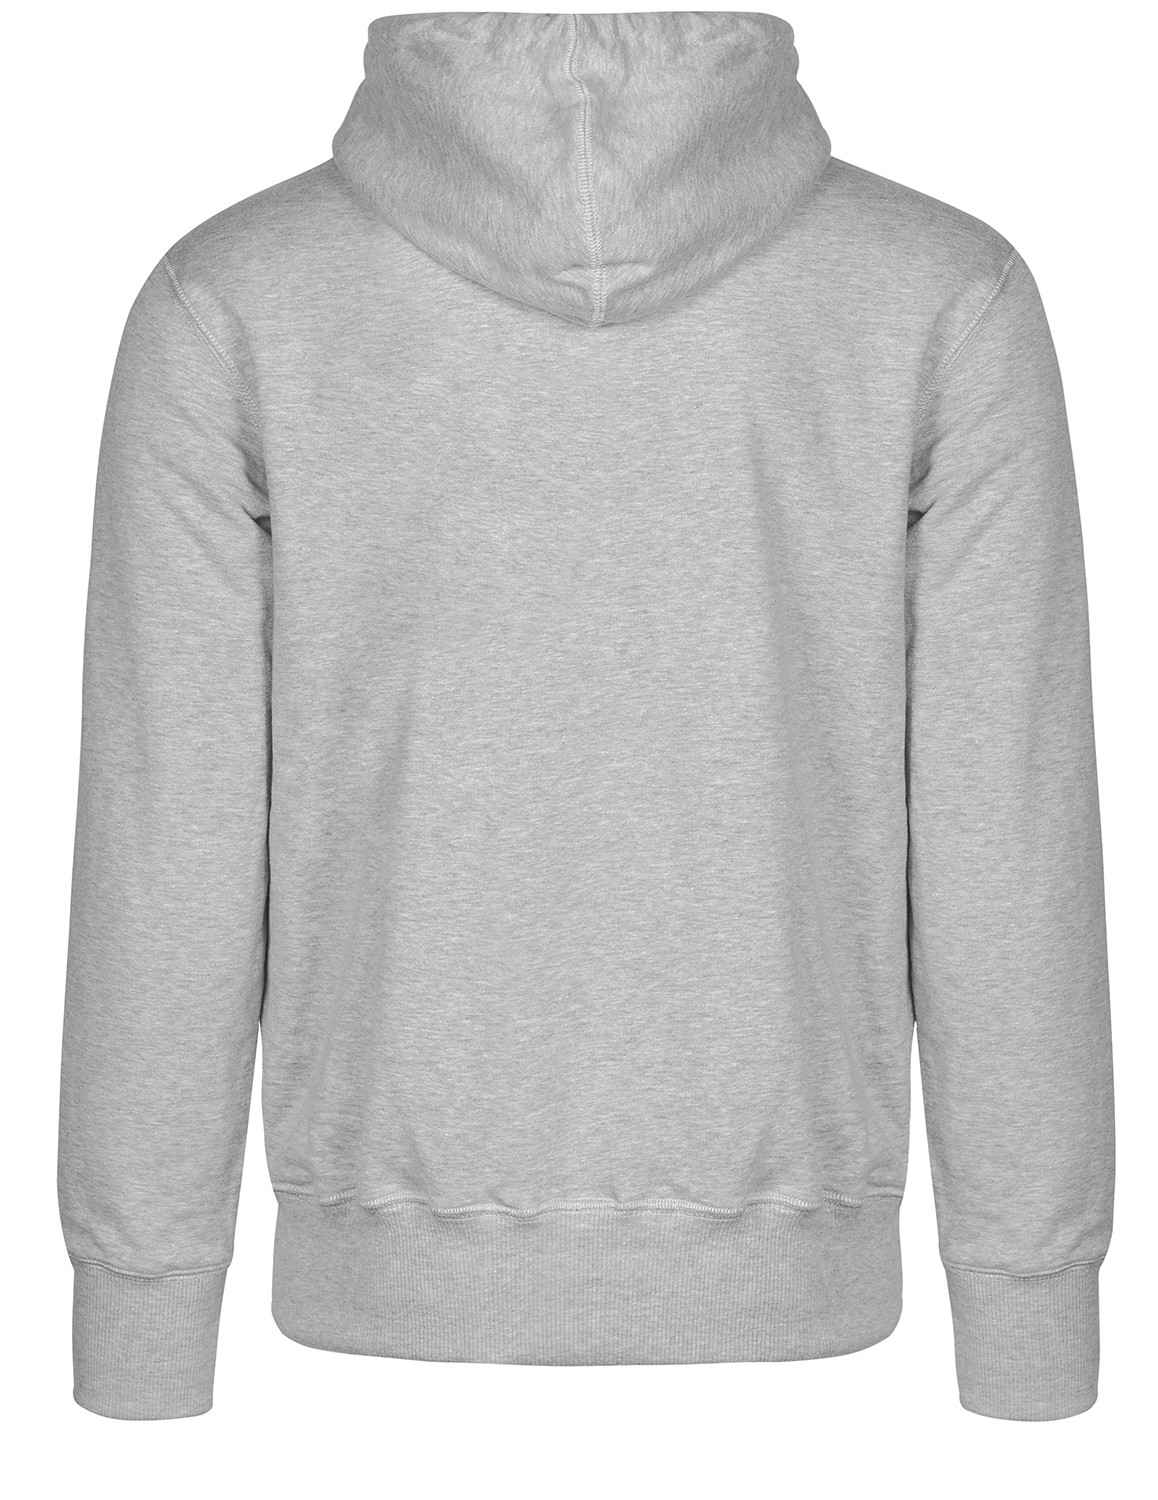 Wome XFN Sweatshirt Grey